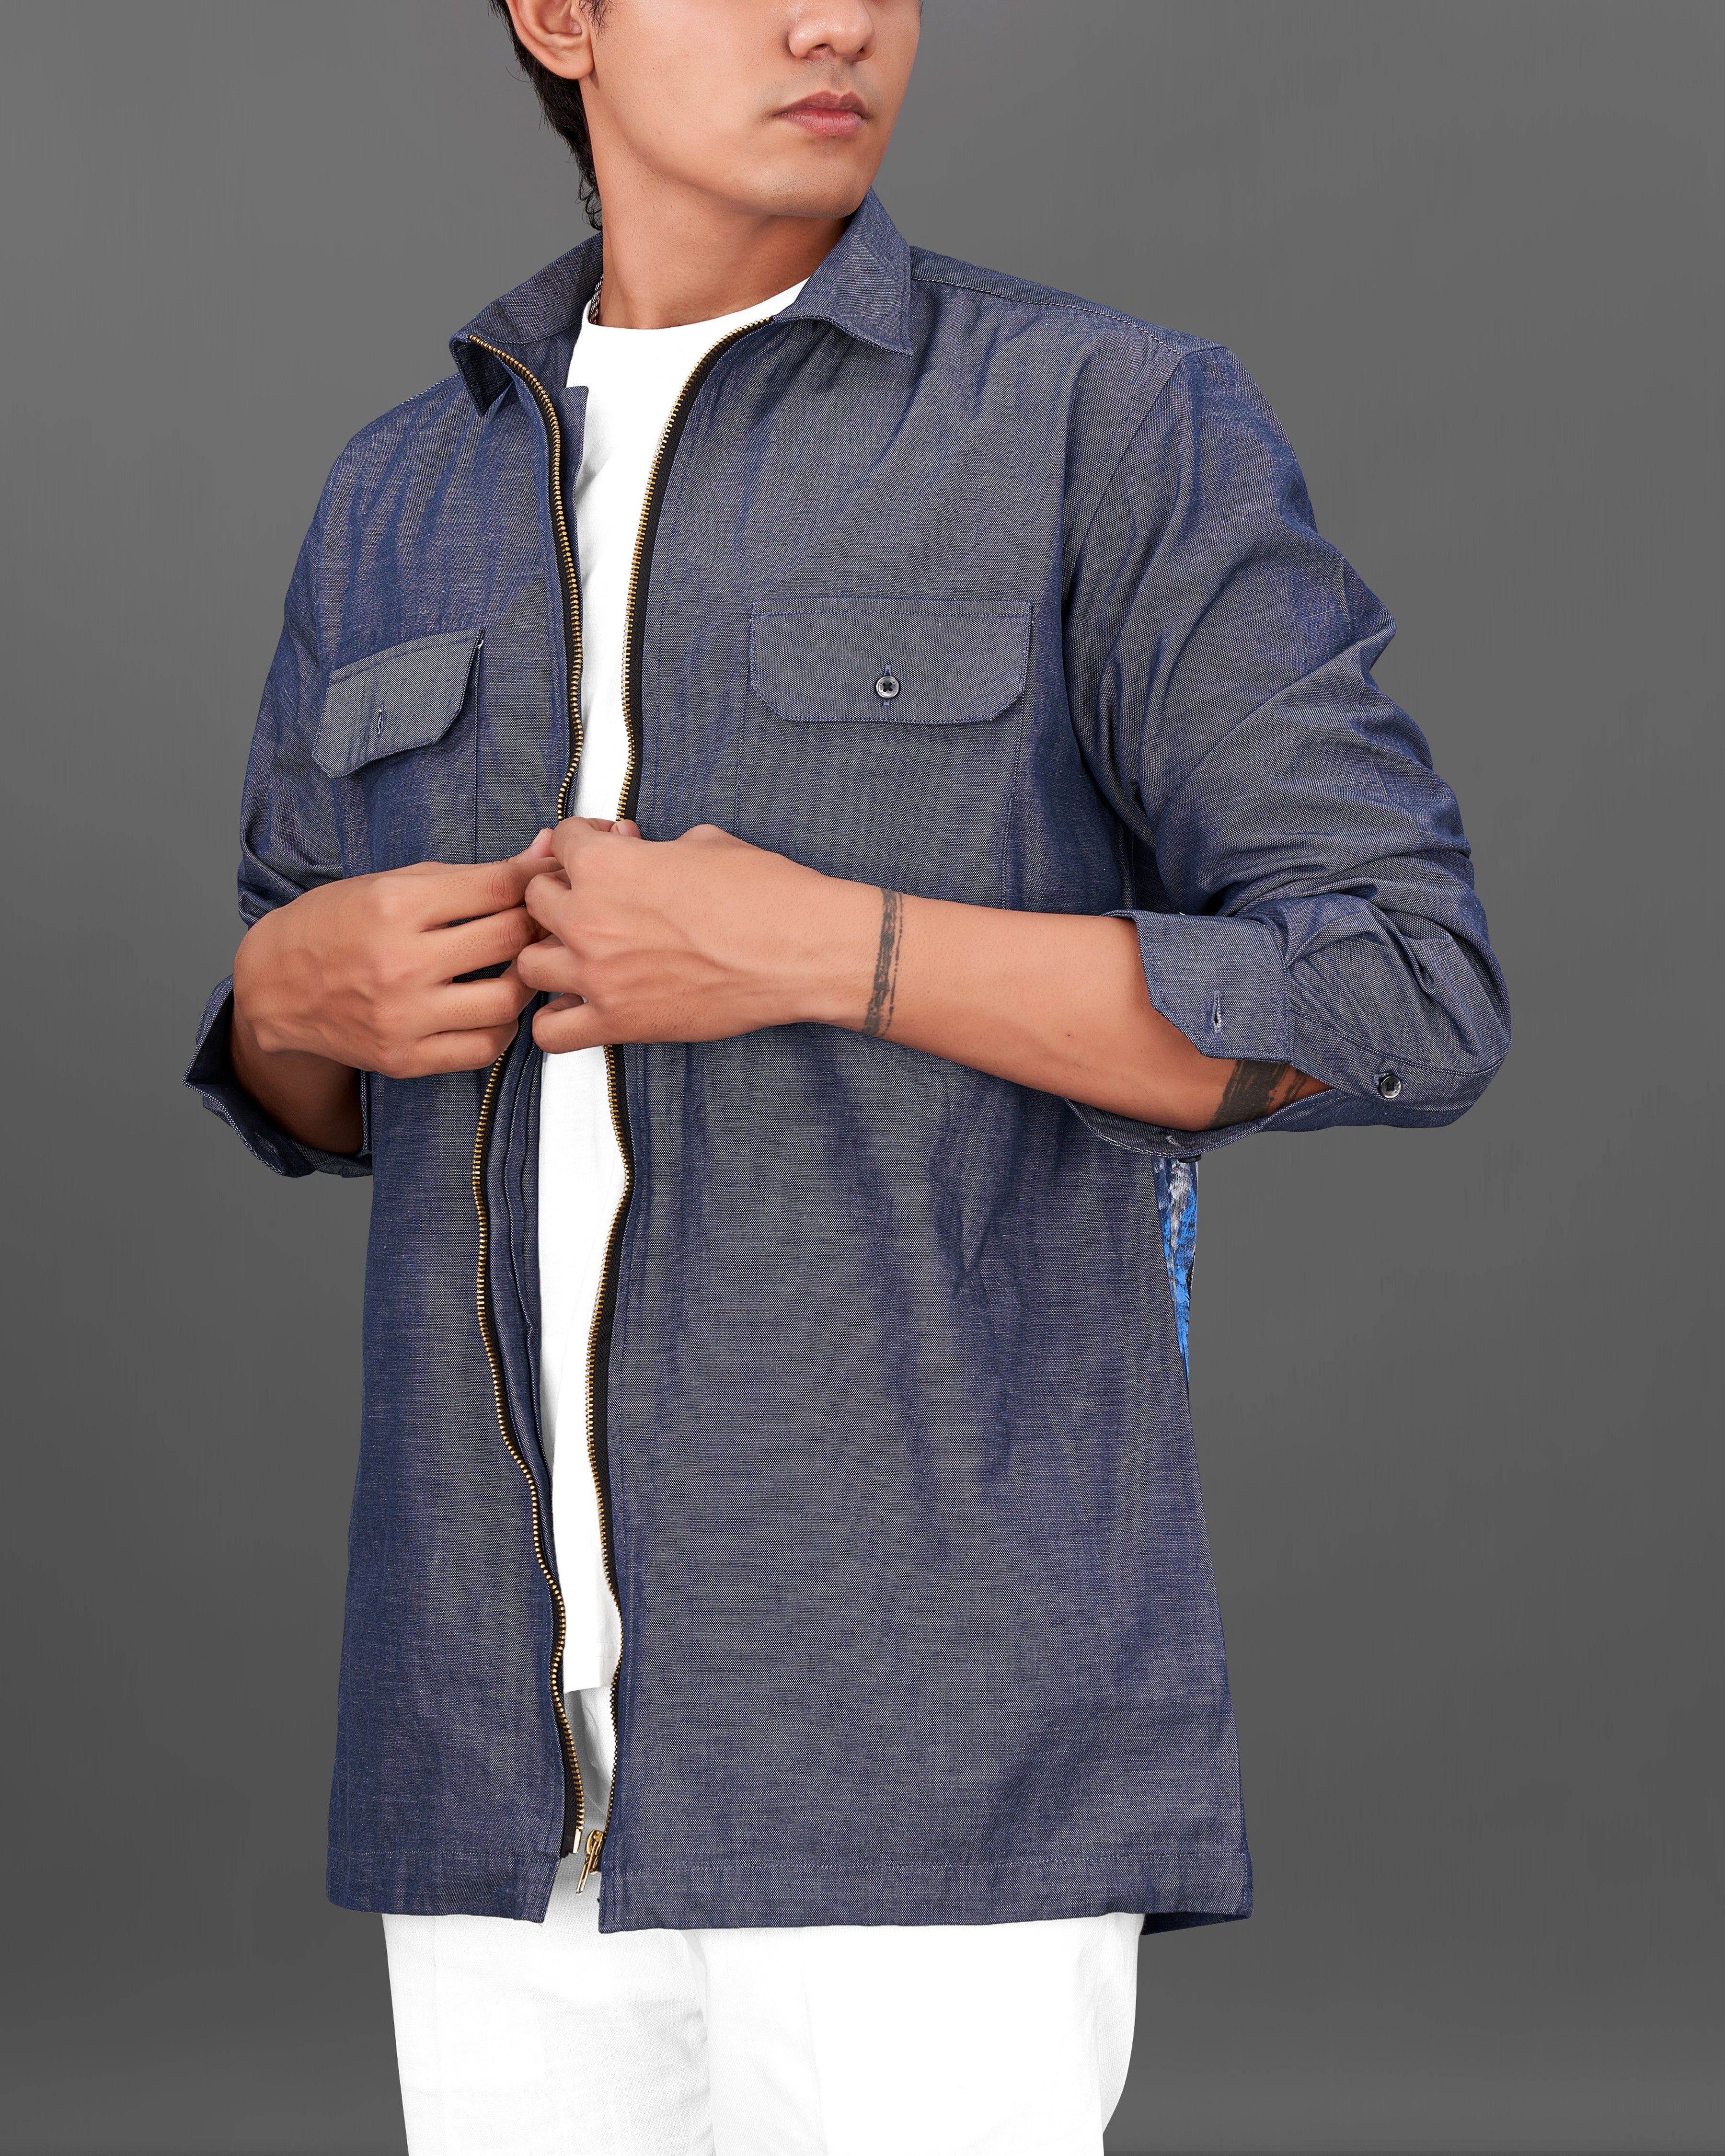 Blue Ladies Stylish Denim Shirt, Size: S-XL at Rs 421/piece in New Delhi |  ID: 13661463988